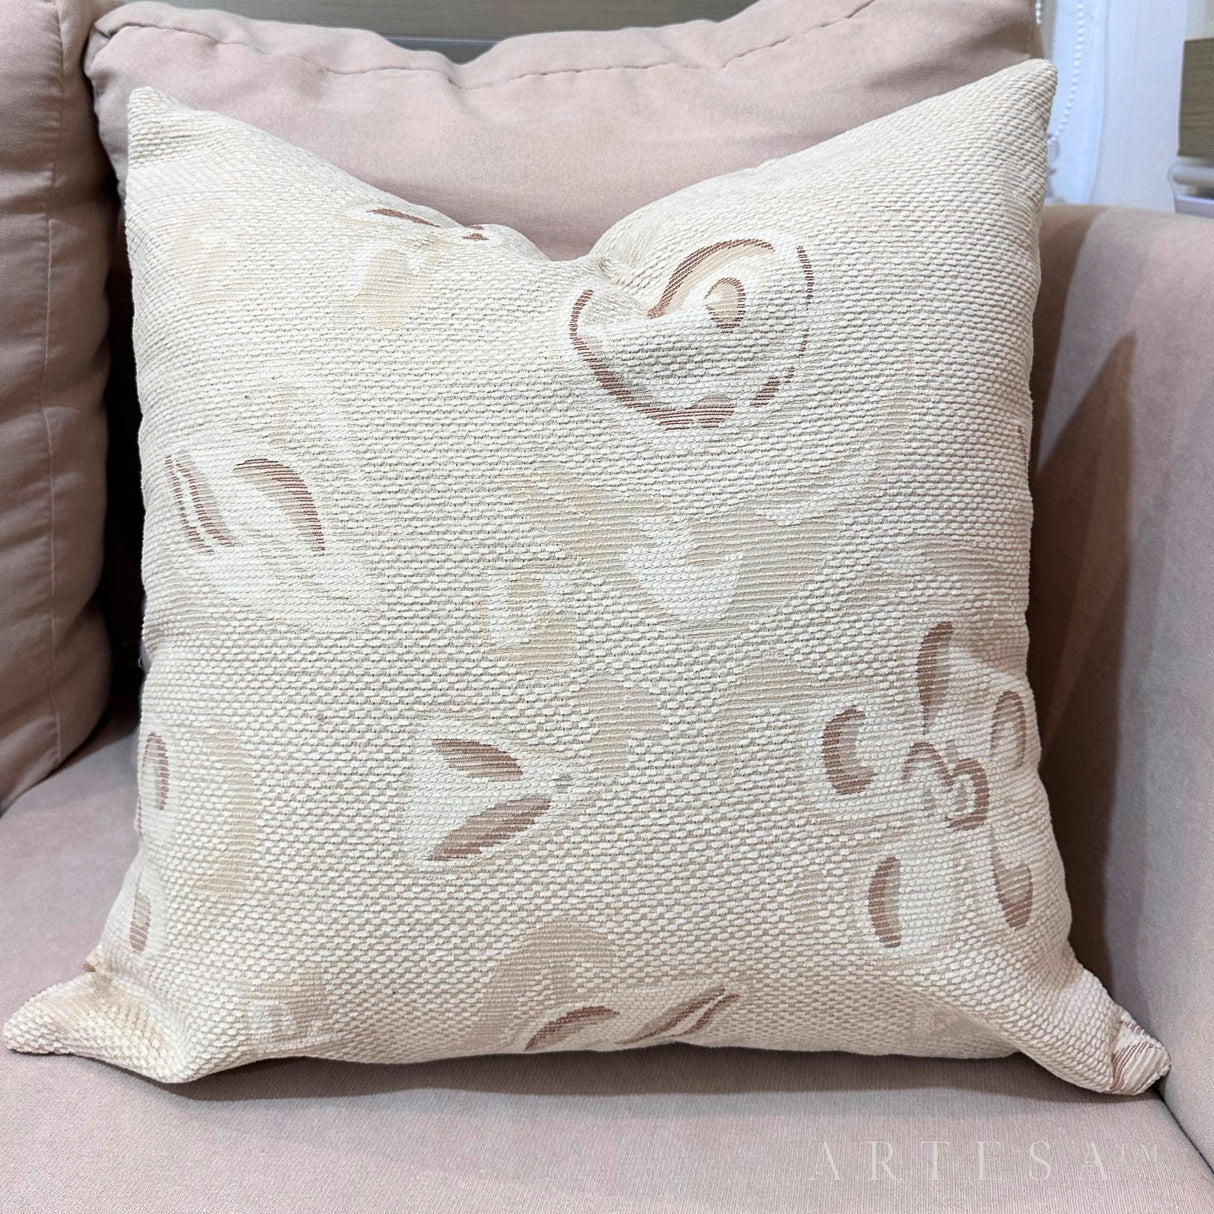 Artesa Maliah Premium Cotton Chanel Throw Pillow Cover with hidden zipper closure - Elegant Home Decor Accent